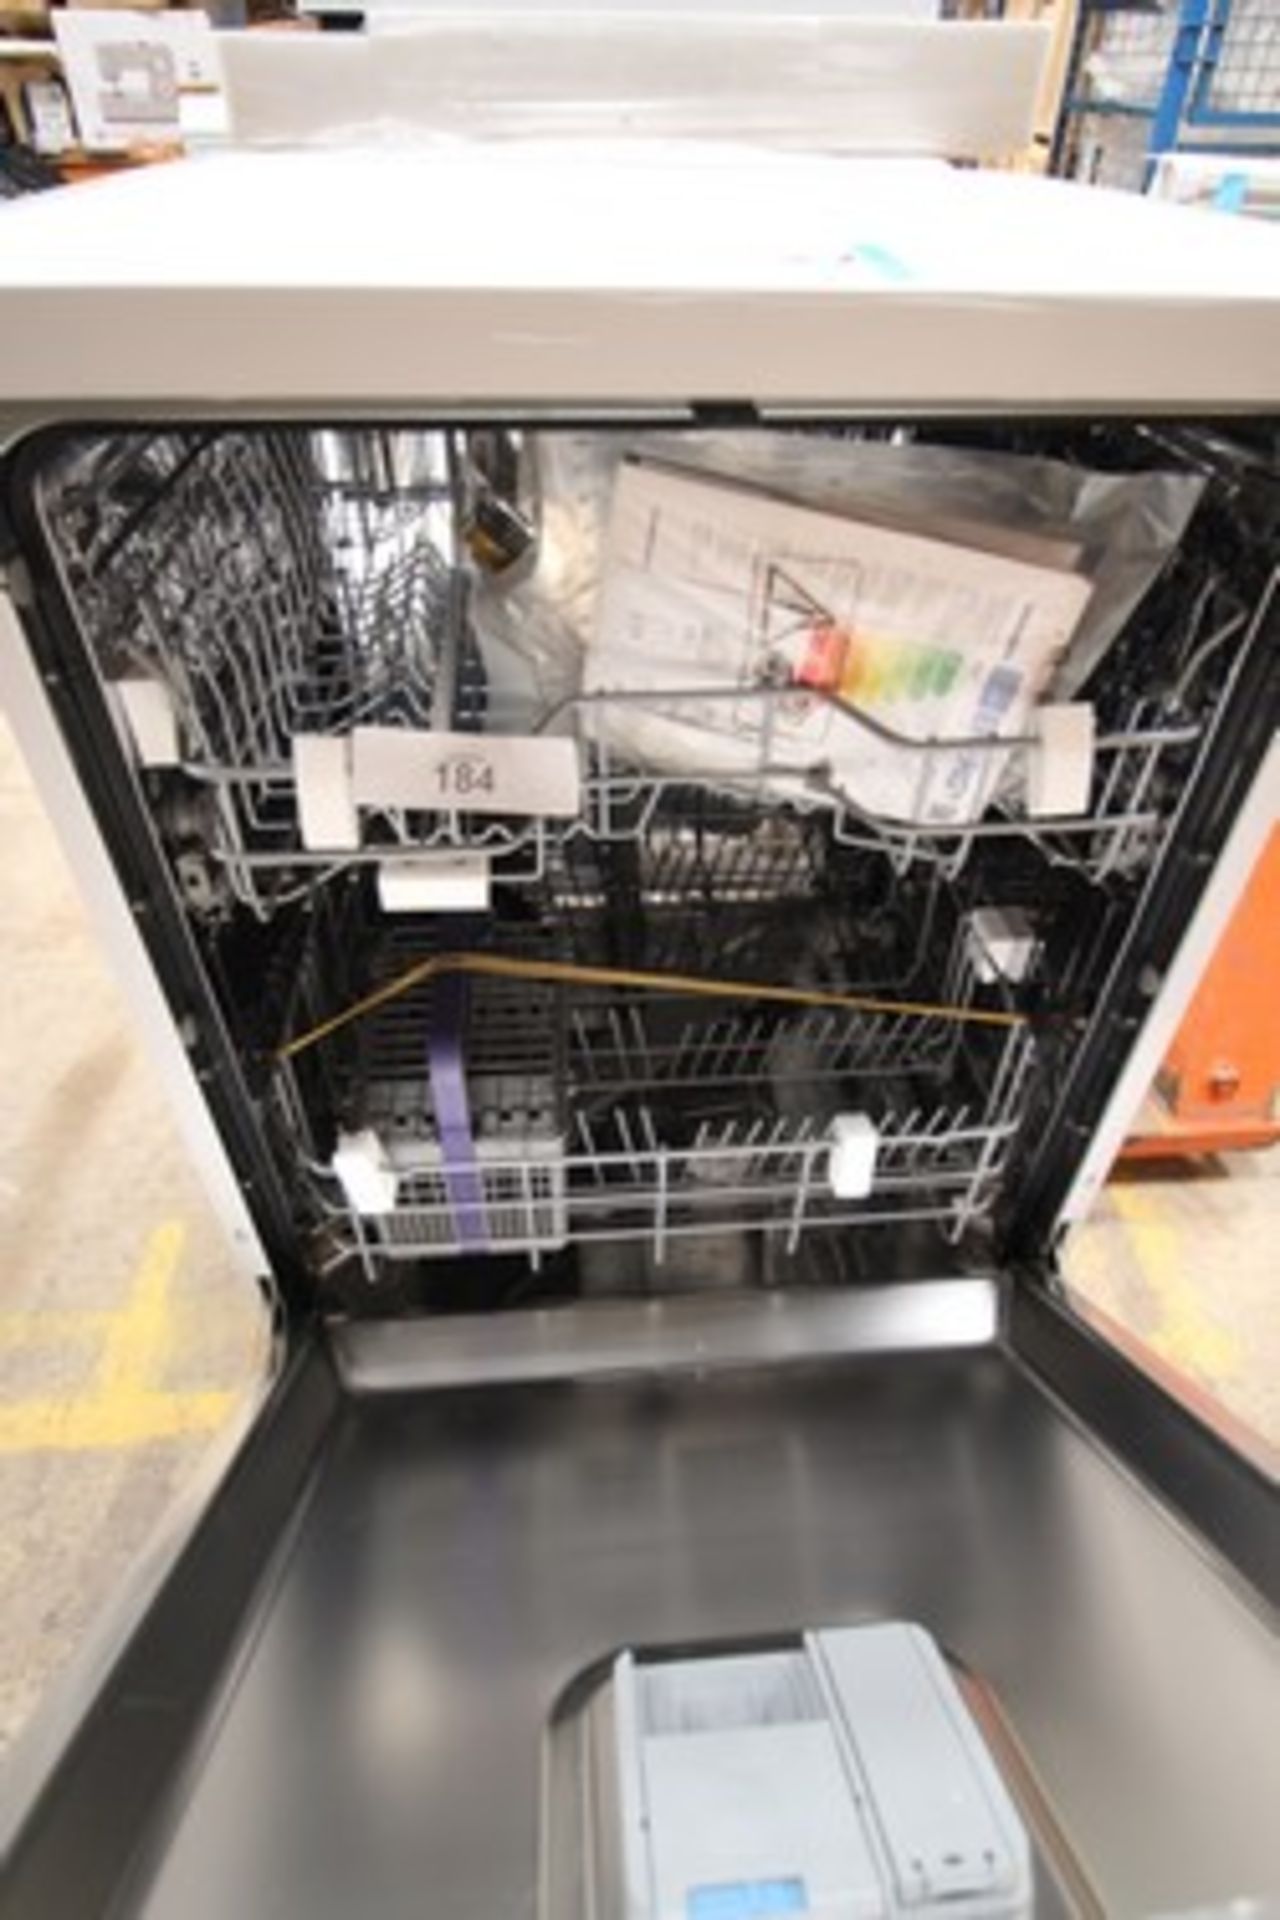 1 x Beko free standing dishwasher, Model DVN05C20W, large dent to back left hand side panel - New ( - Image 3 of 4